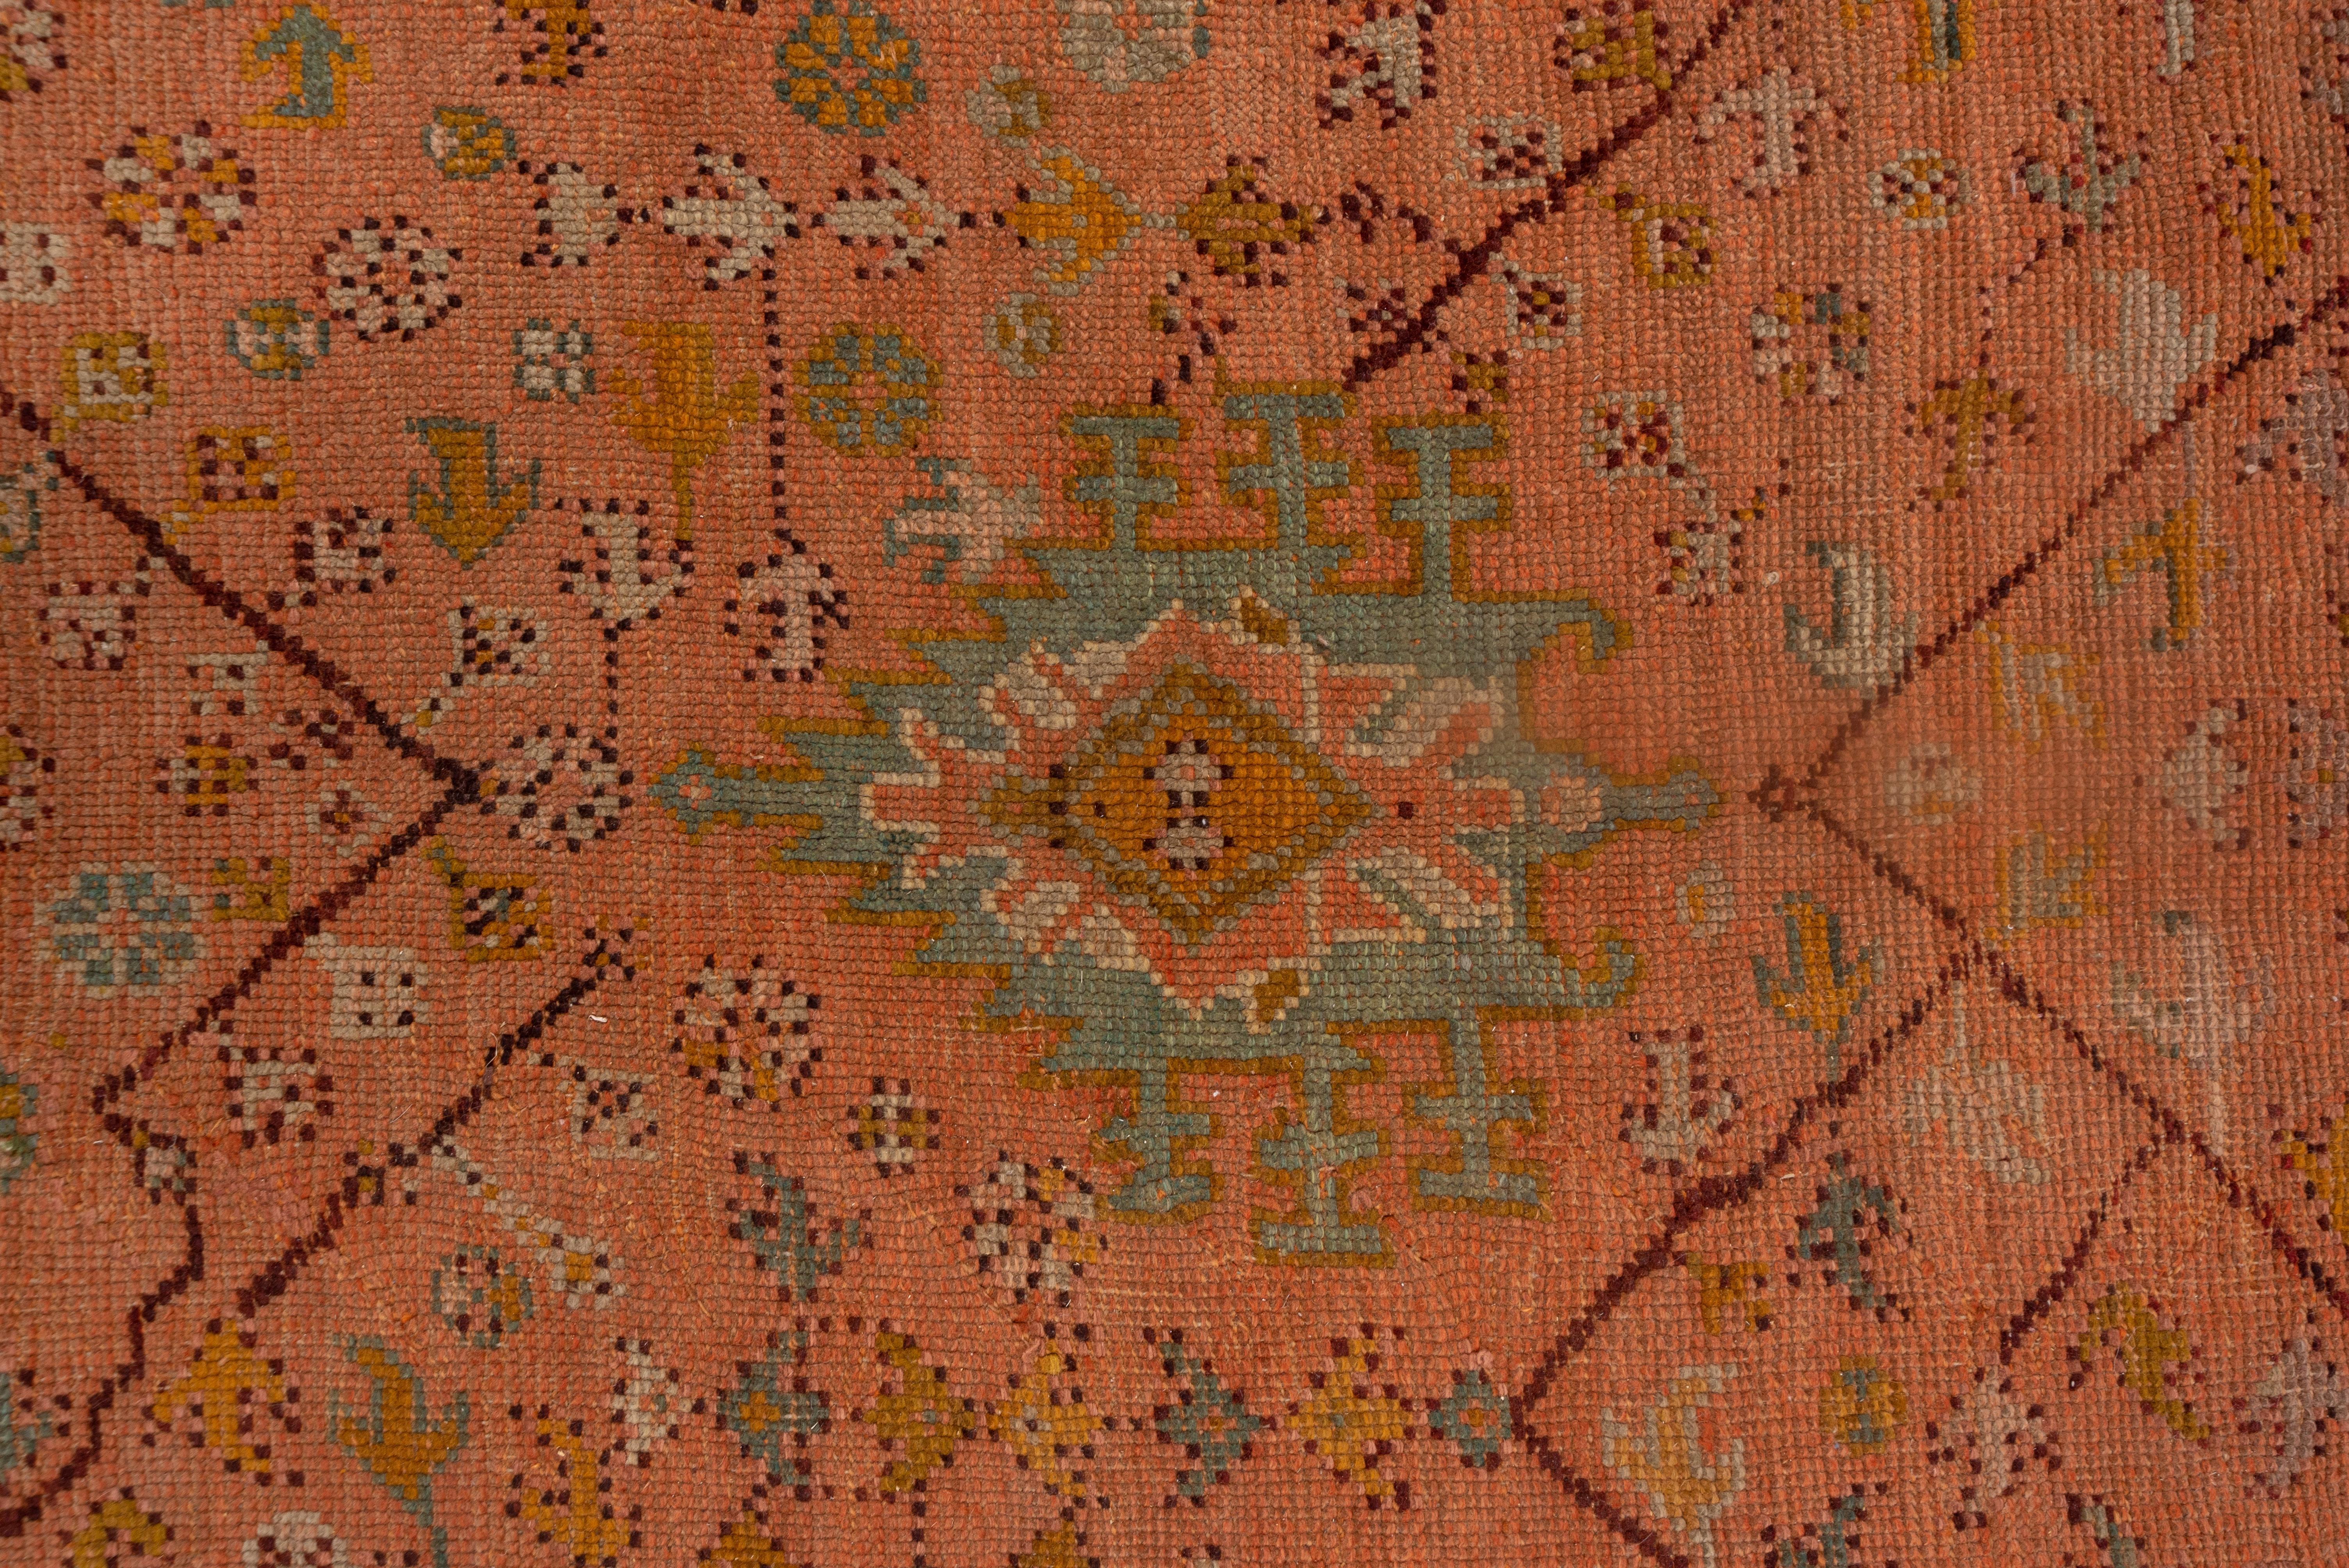 Antique Square Turkish Oushak Carpet, Pink Allover Field, Mustard & Green Border For Sale 1